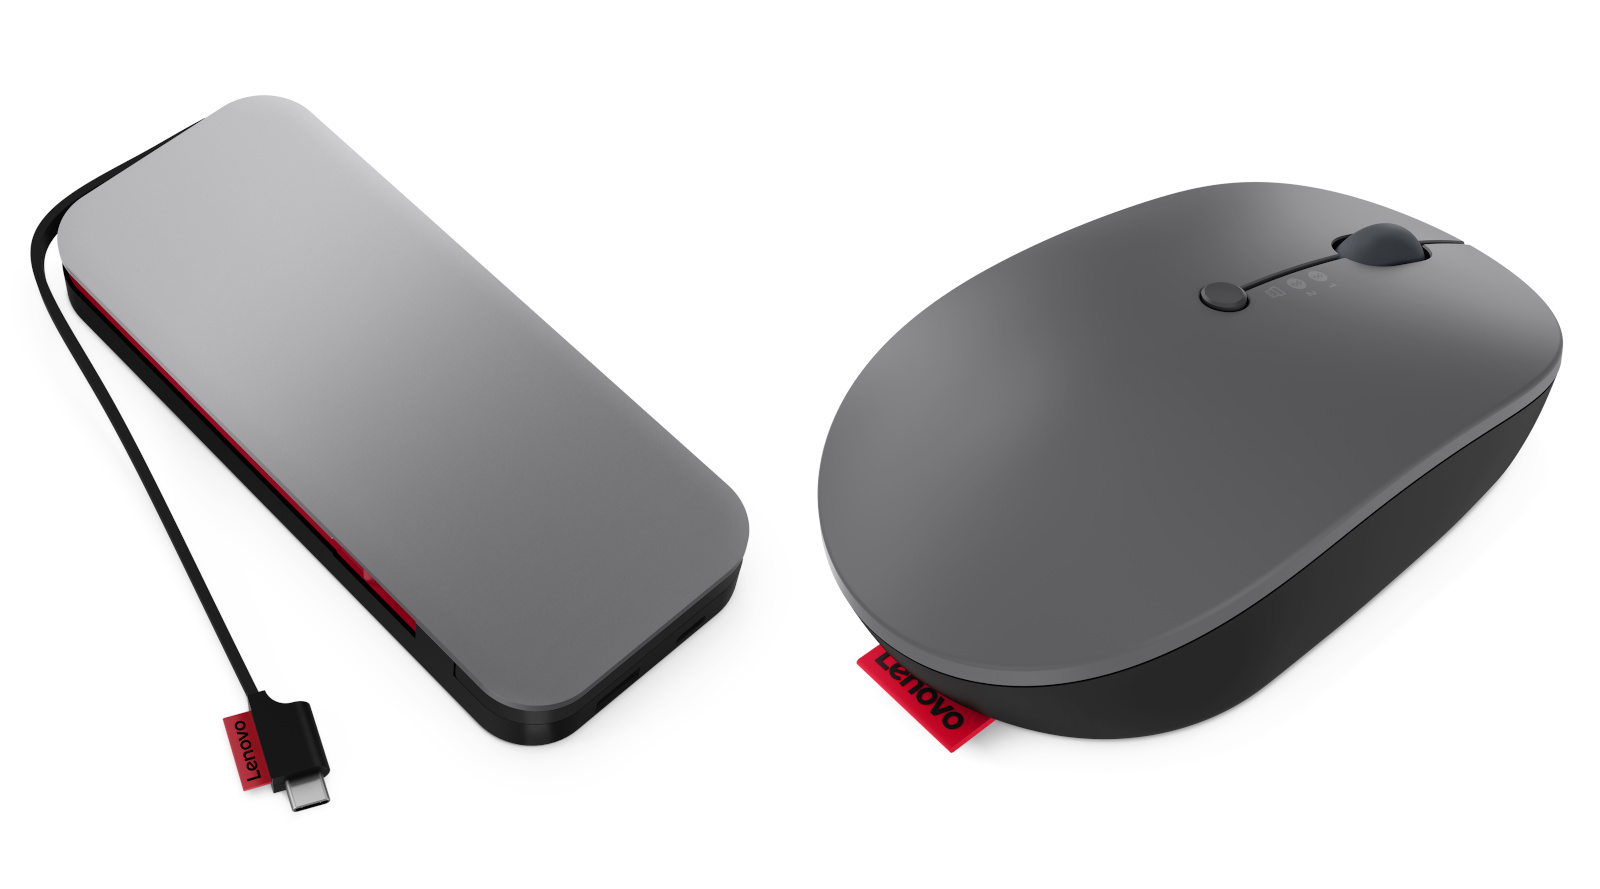 Lenovo introduces ‘Go’ line of PC accessories